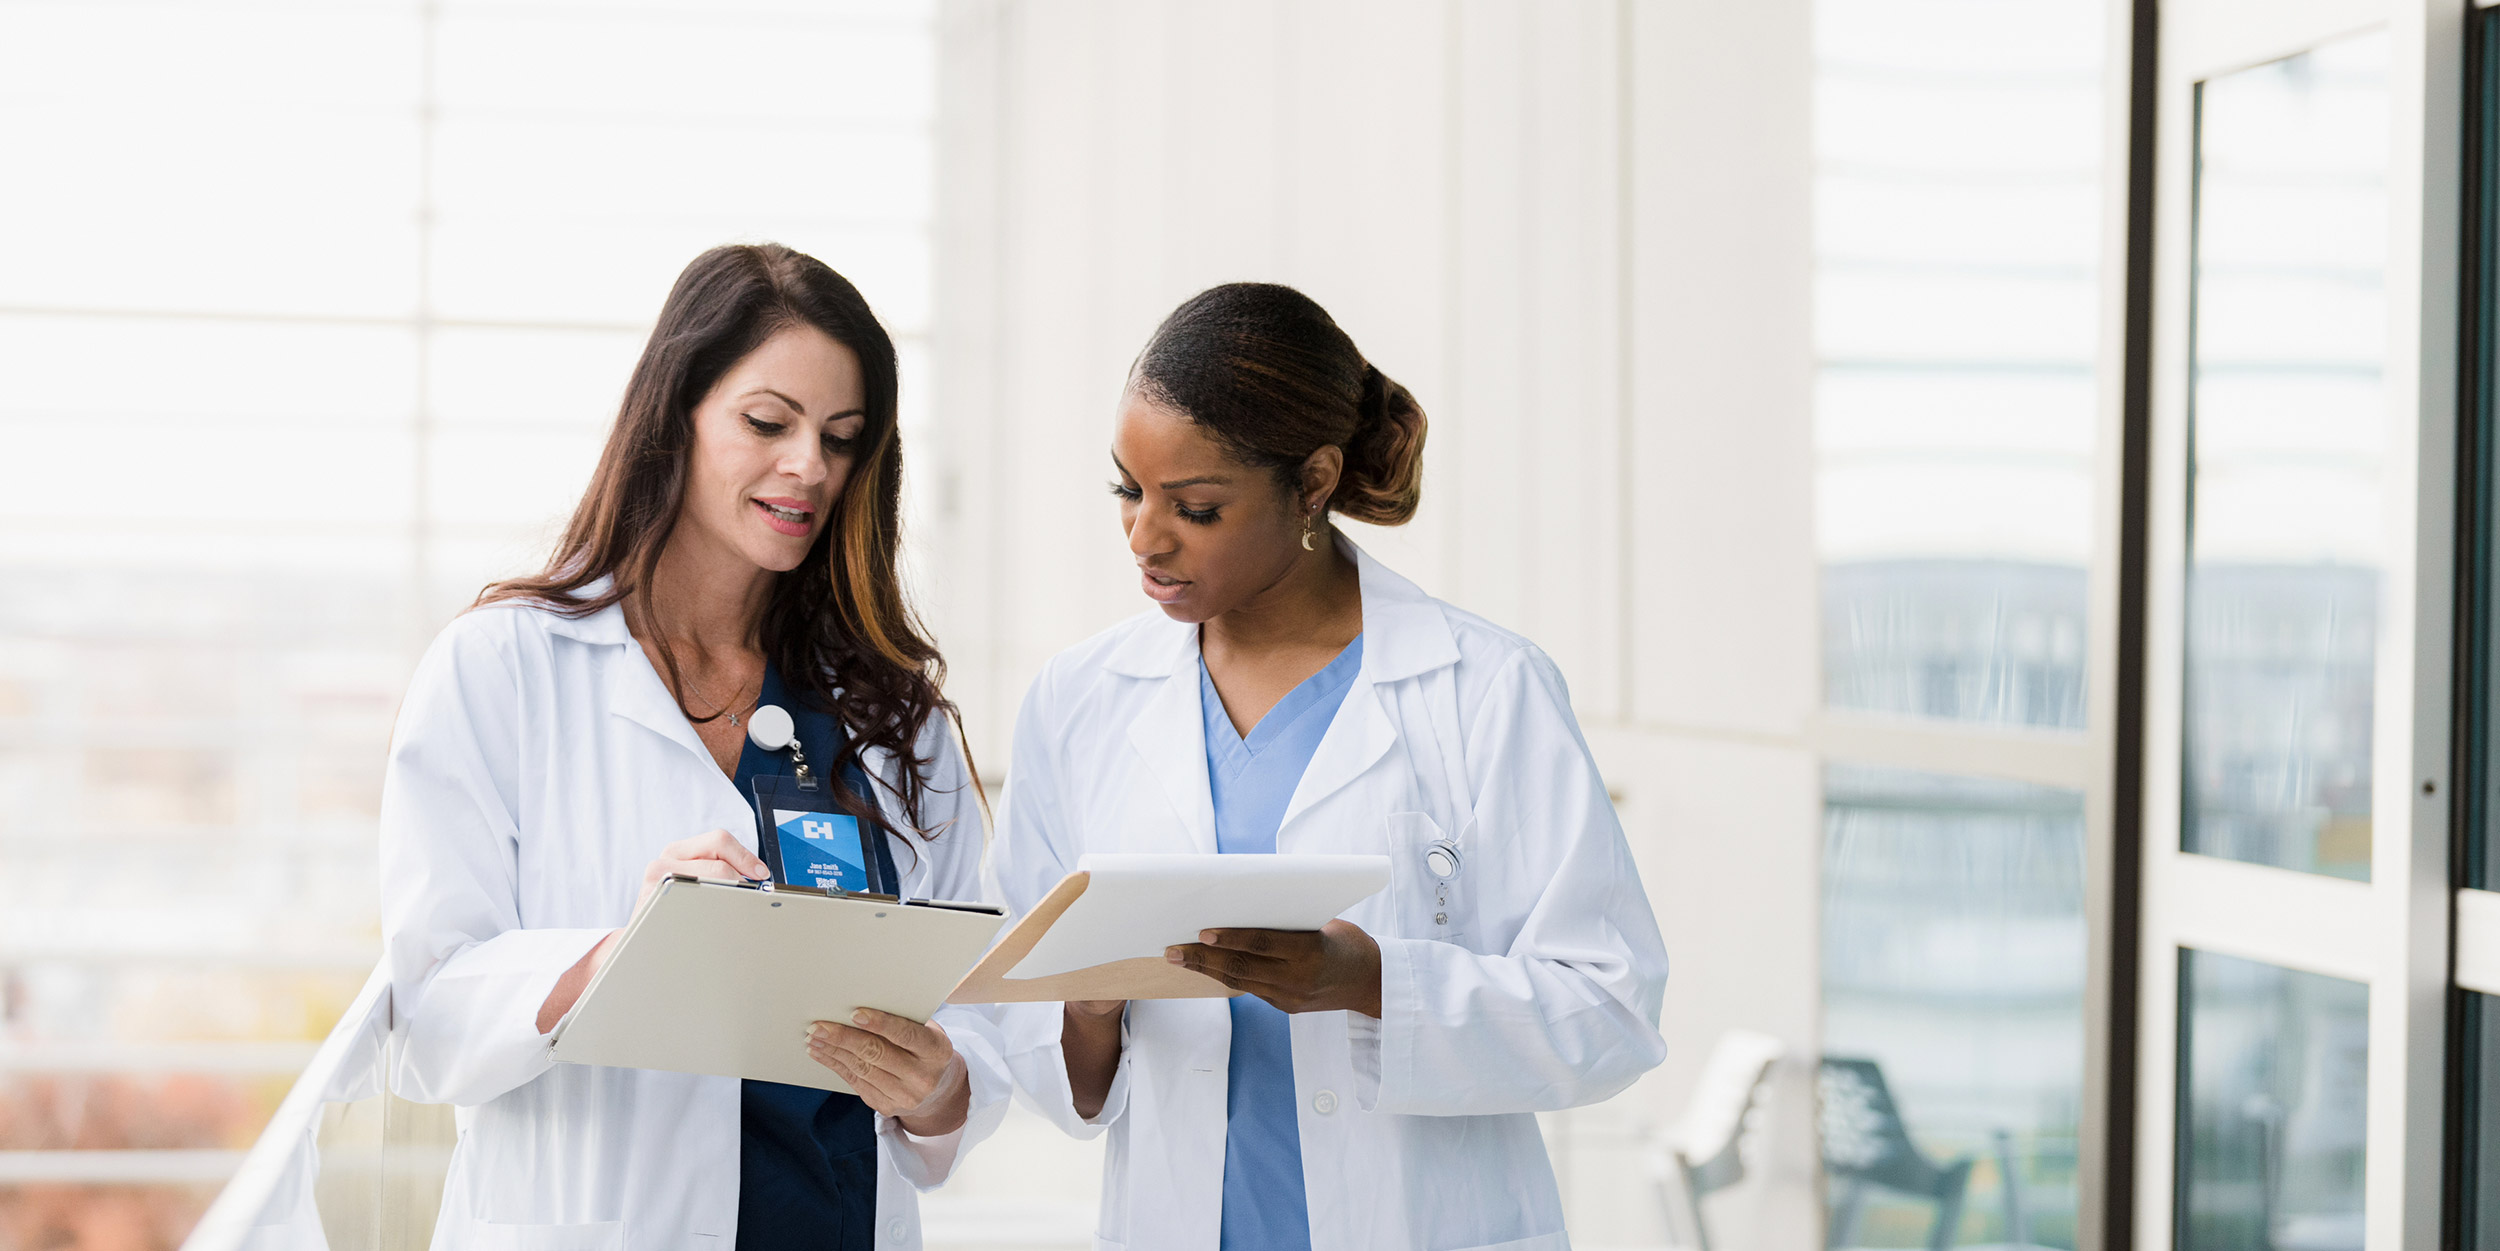 How Can Advanced Practice Providers Help Bridge the Urology Workforce Gap?